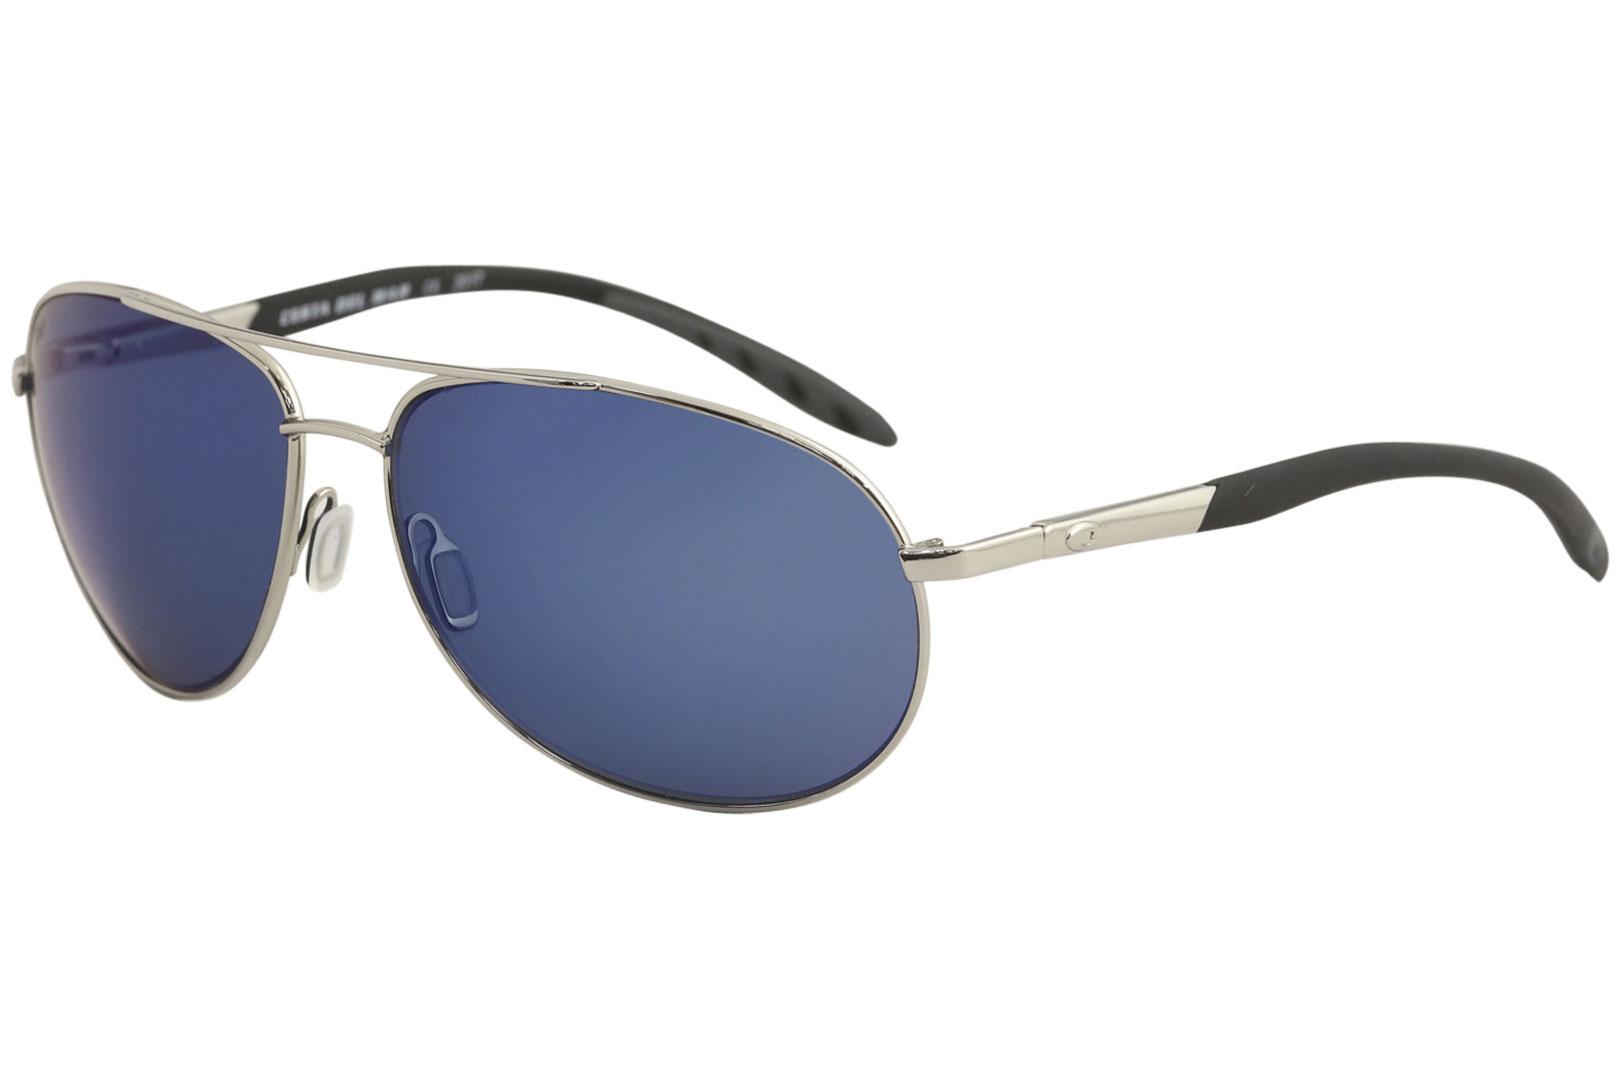 Costa Del Mar Men's Wingman Polarized Fashion Pilot Sunglasses - Palladium/Blue Mirror Polarized   OBMP - Lens 61 Bridge 14 Temple 131mm